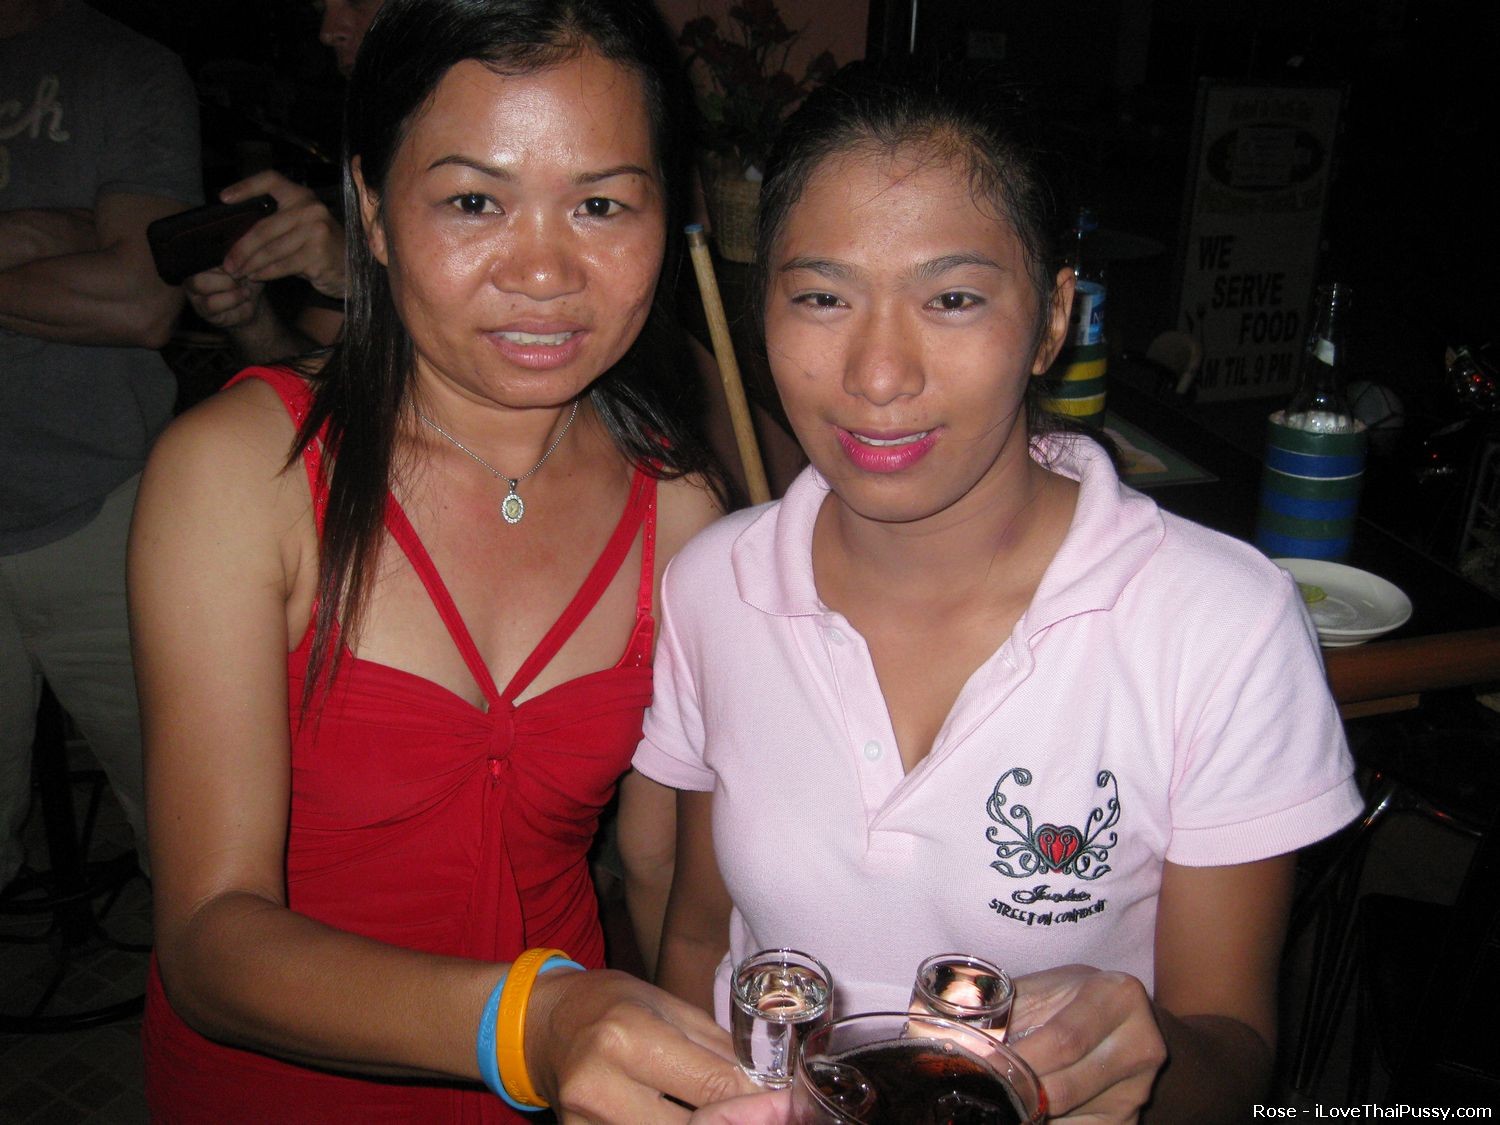 Sporche bargirls tailandesi scopate da un turista sessuale svedese troie interrazziali asiatiche
 #68382214